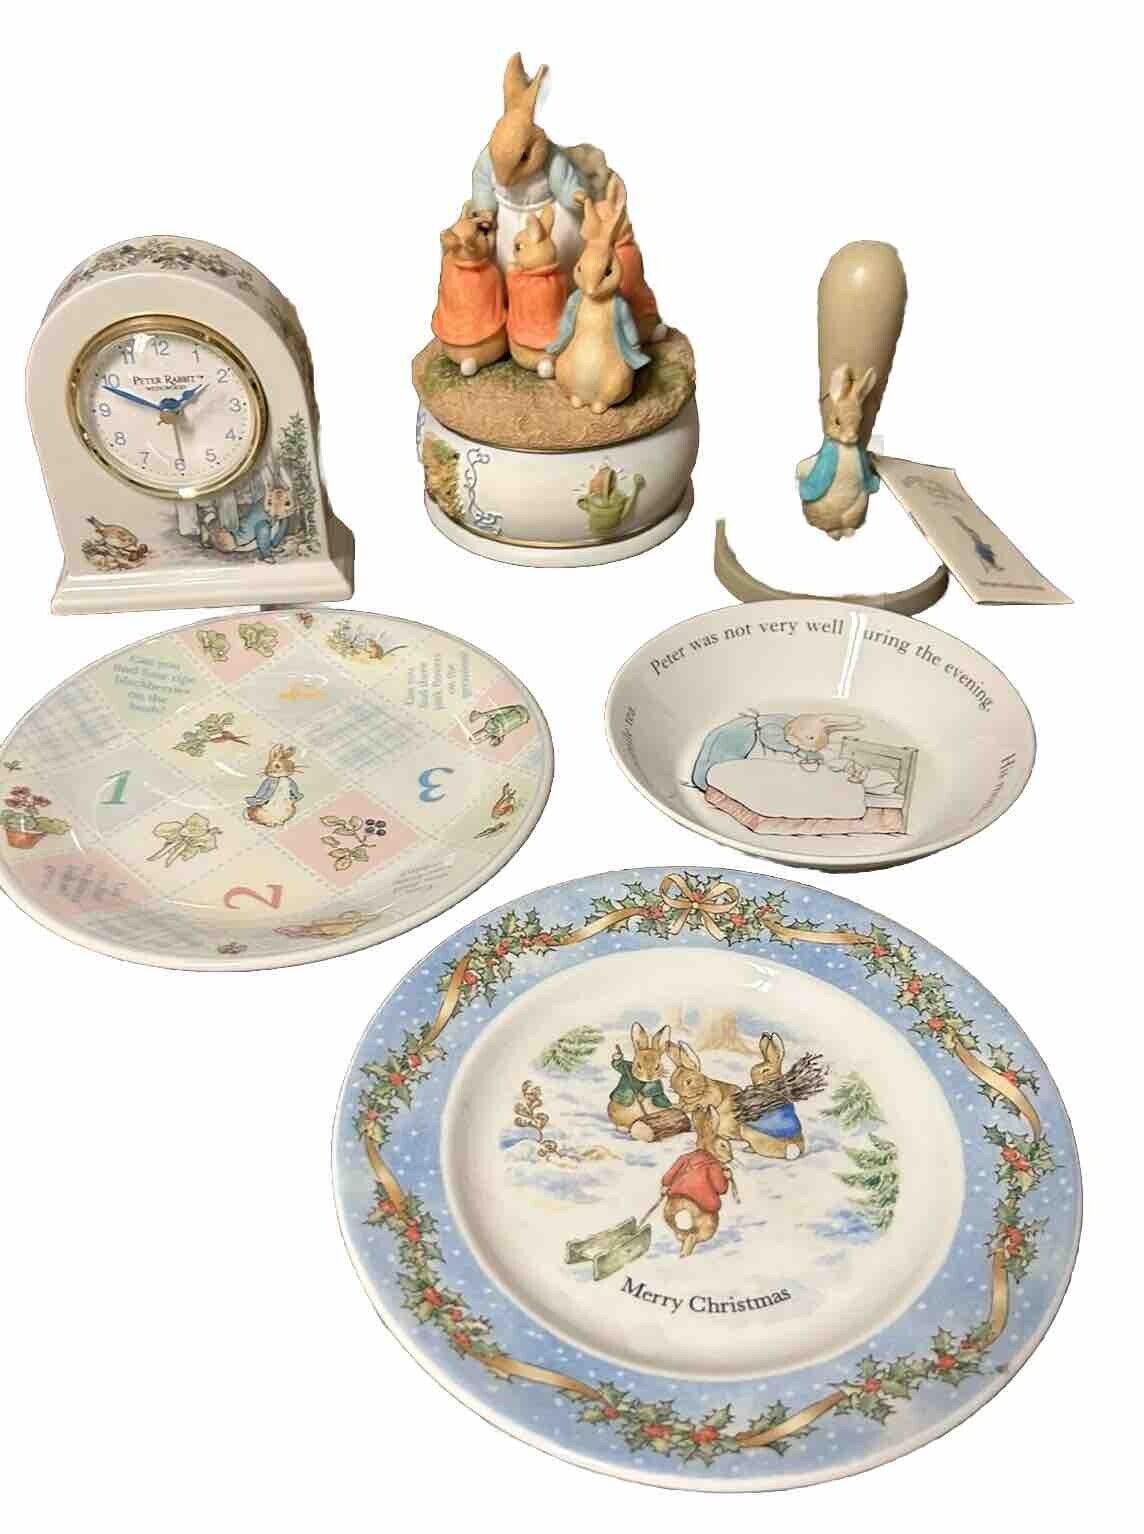 Beatrix Potter Musical Figurine, Wedgwood Clock, Bowl, Plates, Cookie Press